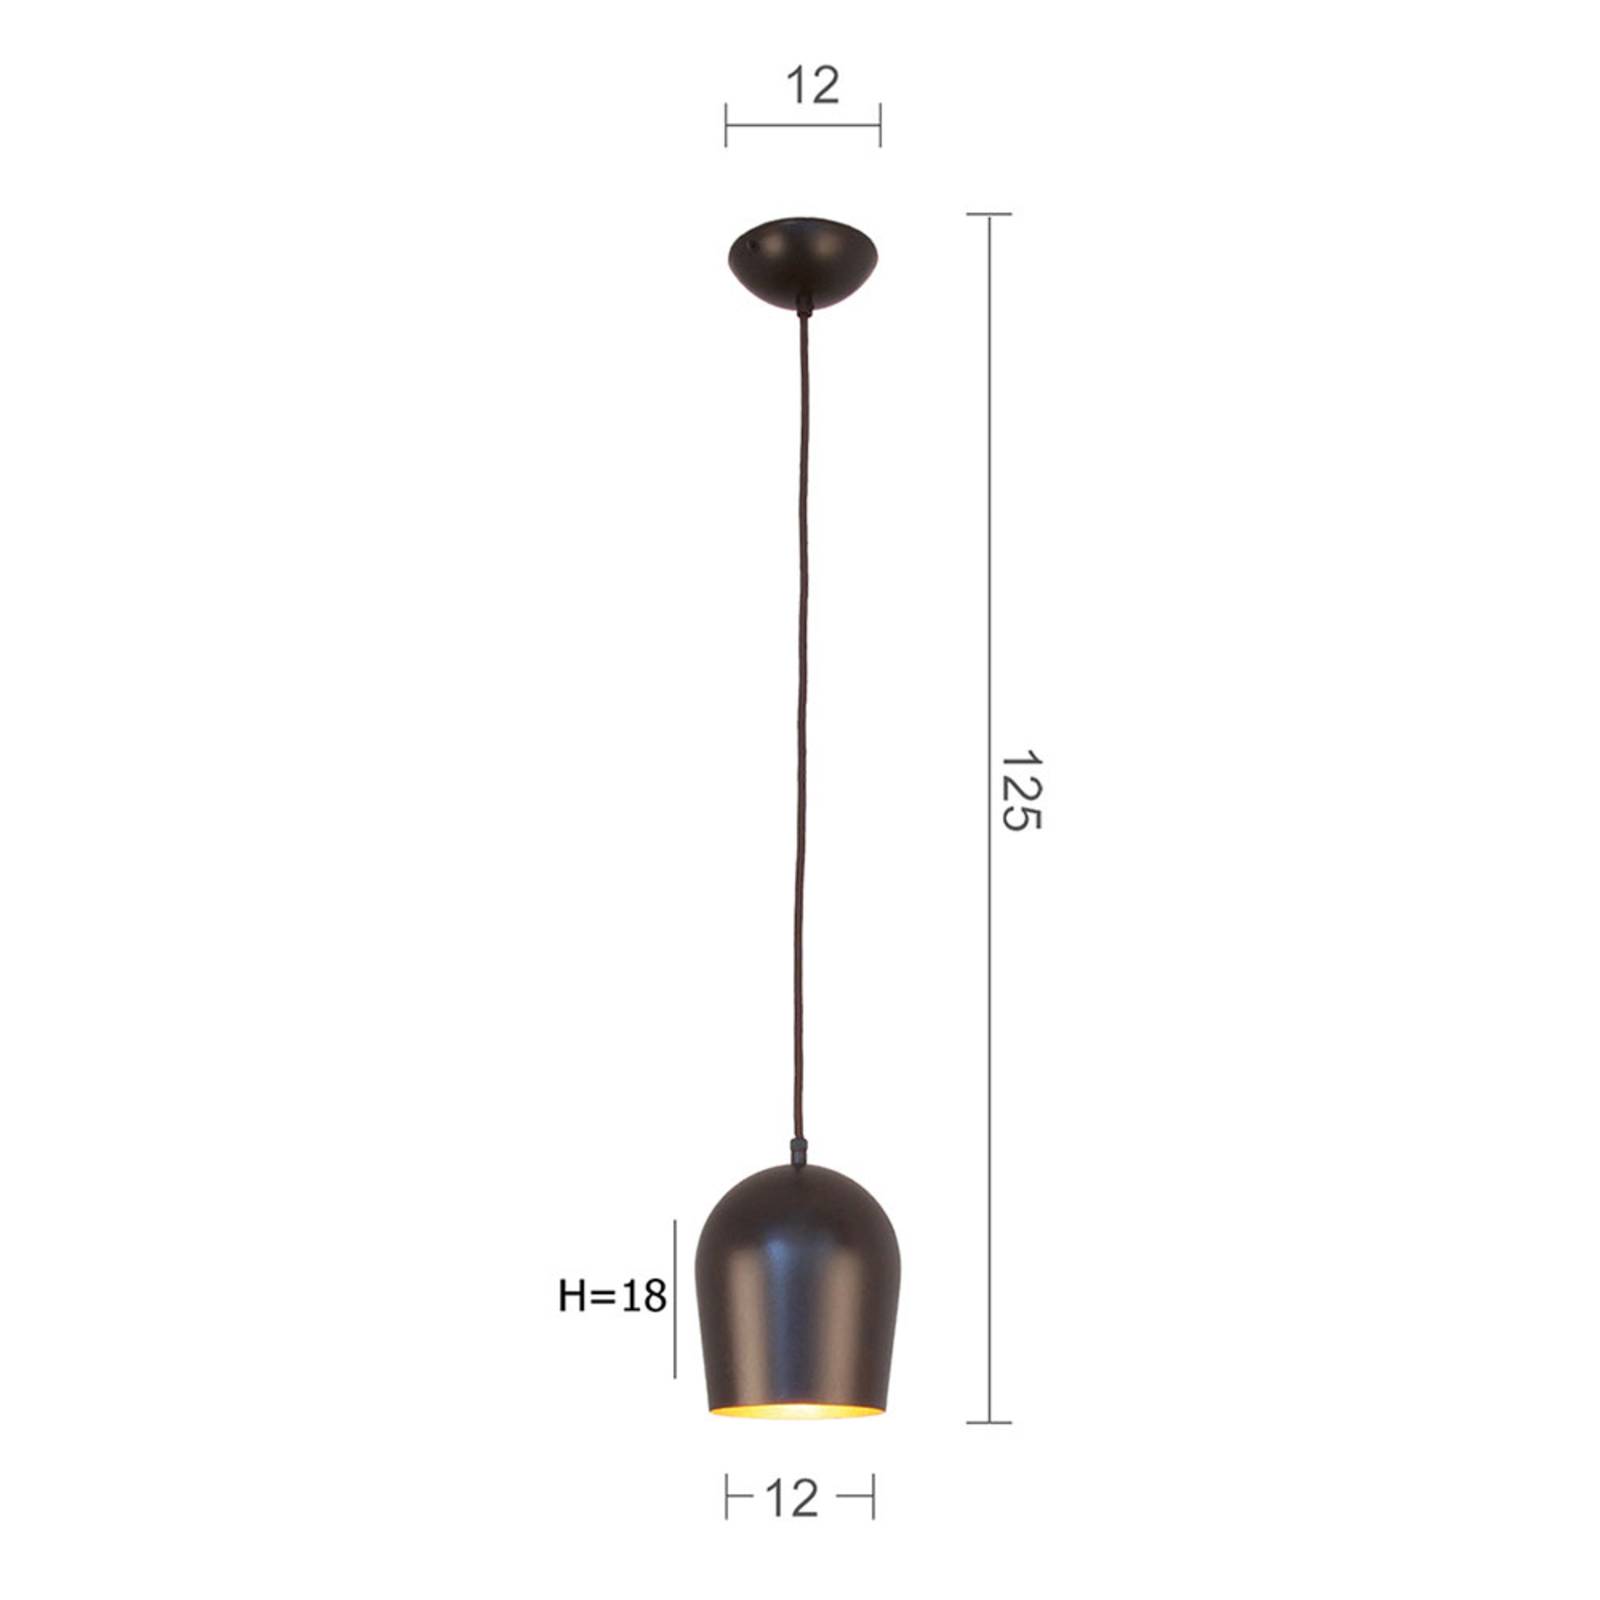 Menzel Solo Glo12 hanglamp in bruin-zwart